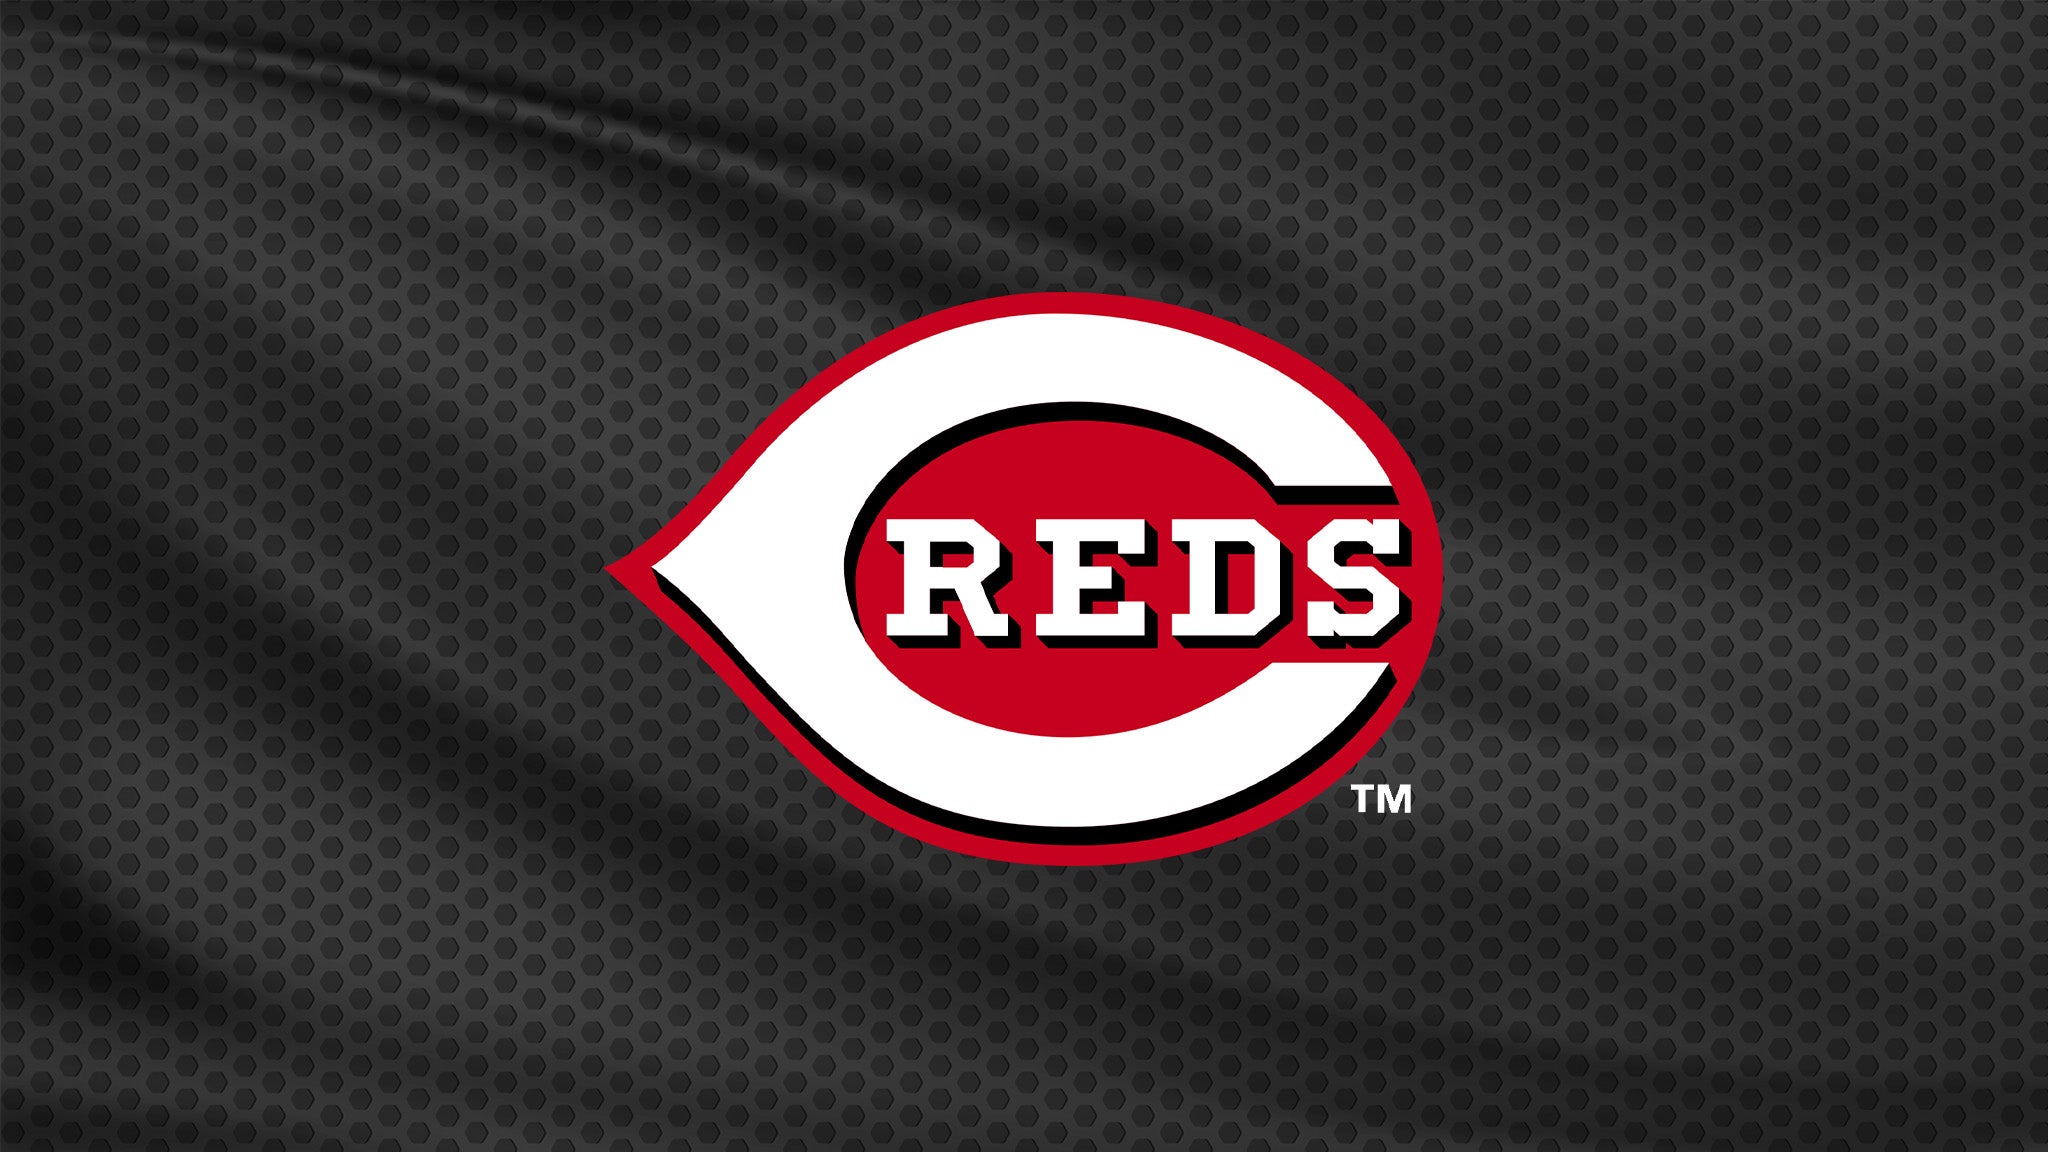 Cincinnati Reds vs. Boston Red Sox